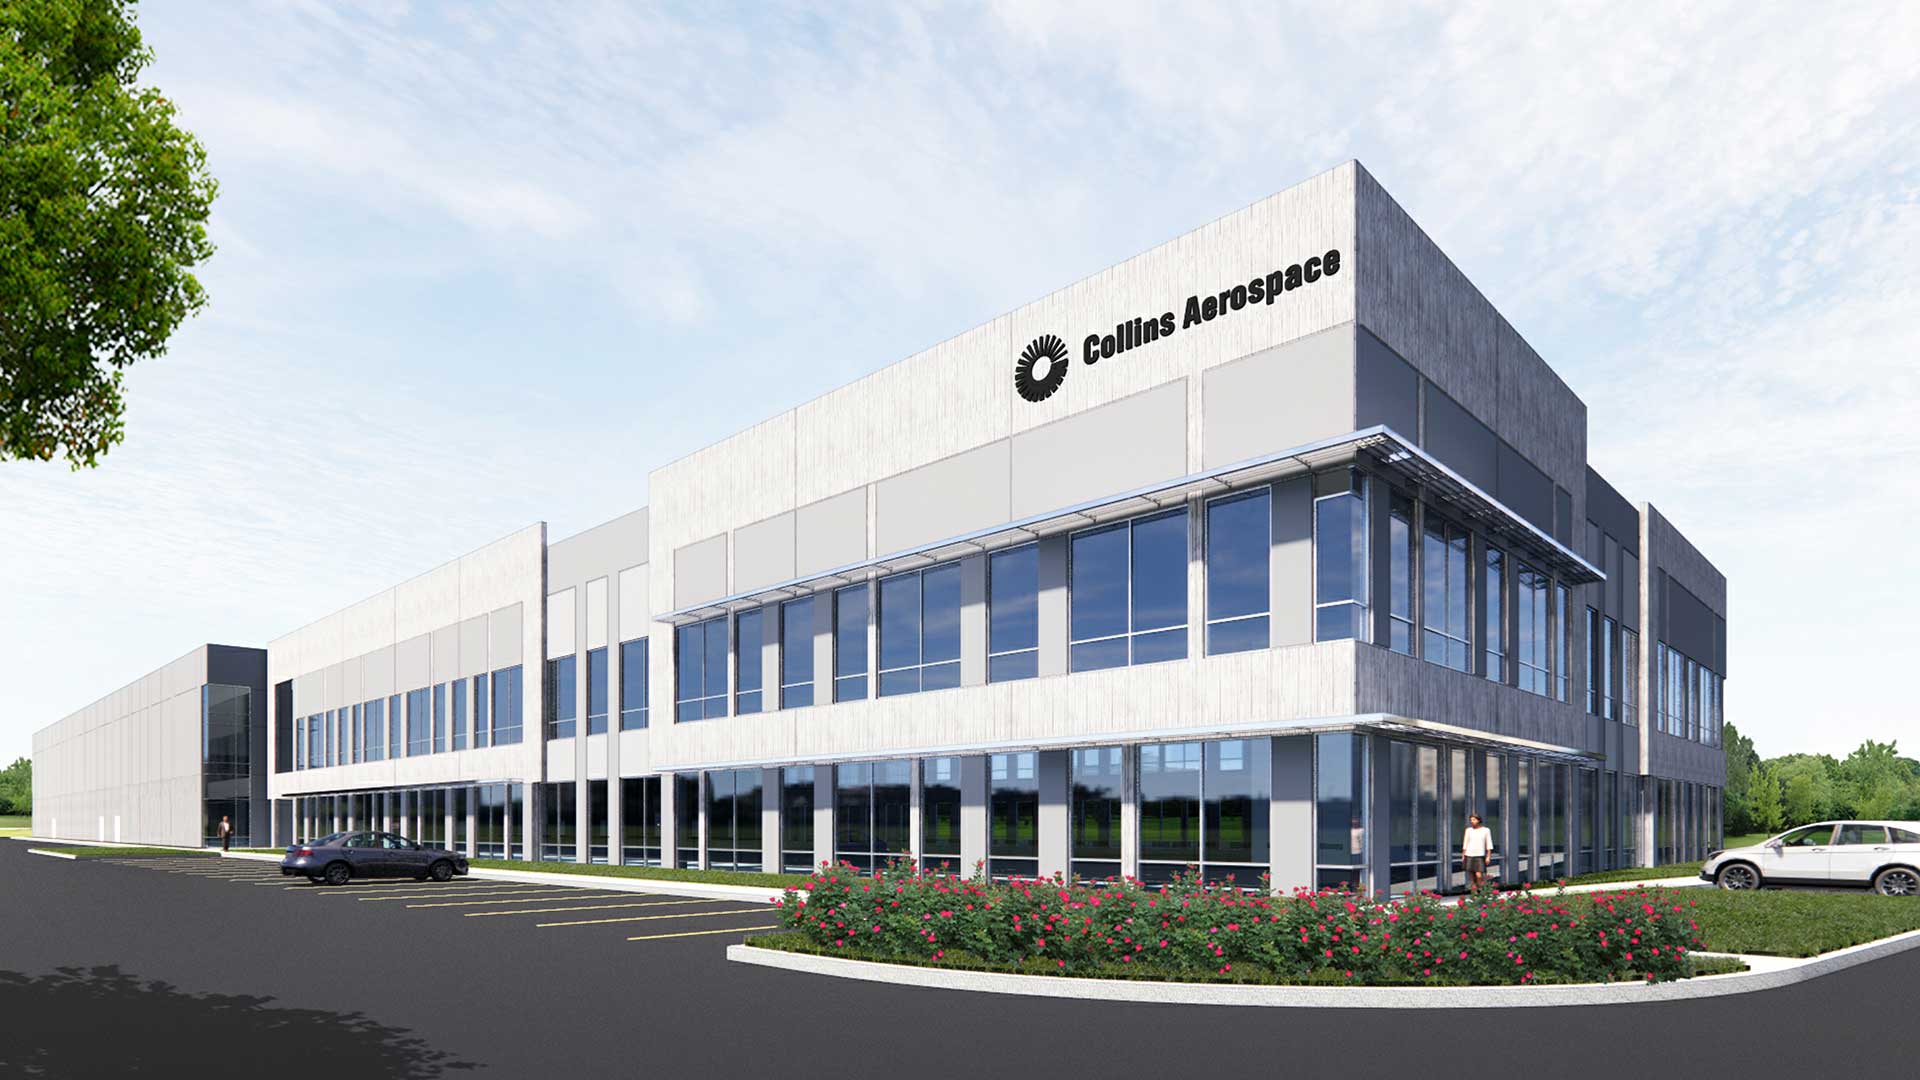 Concept image of future Collins Aerospace facility in Houston